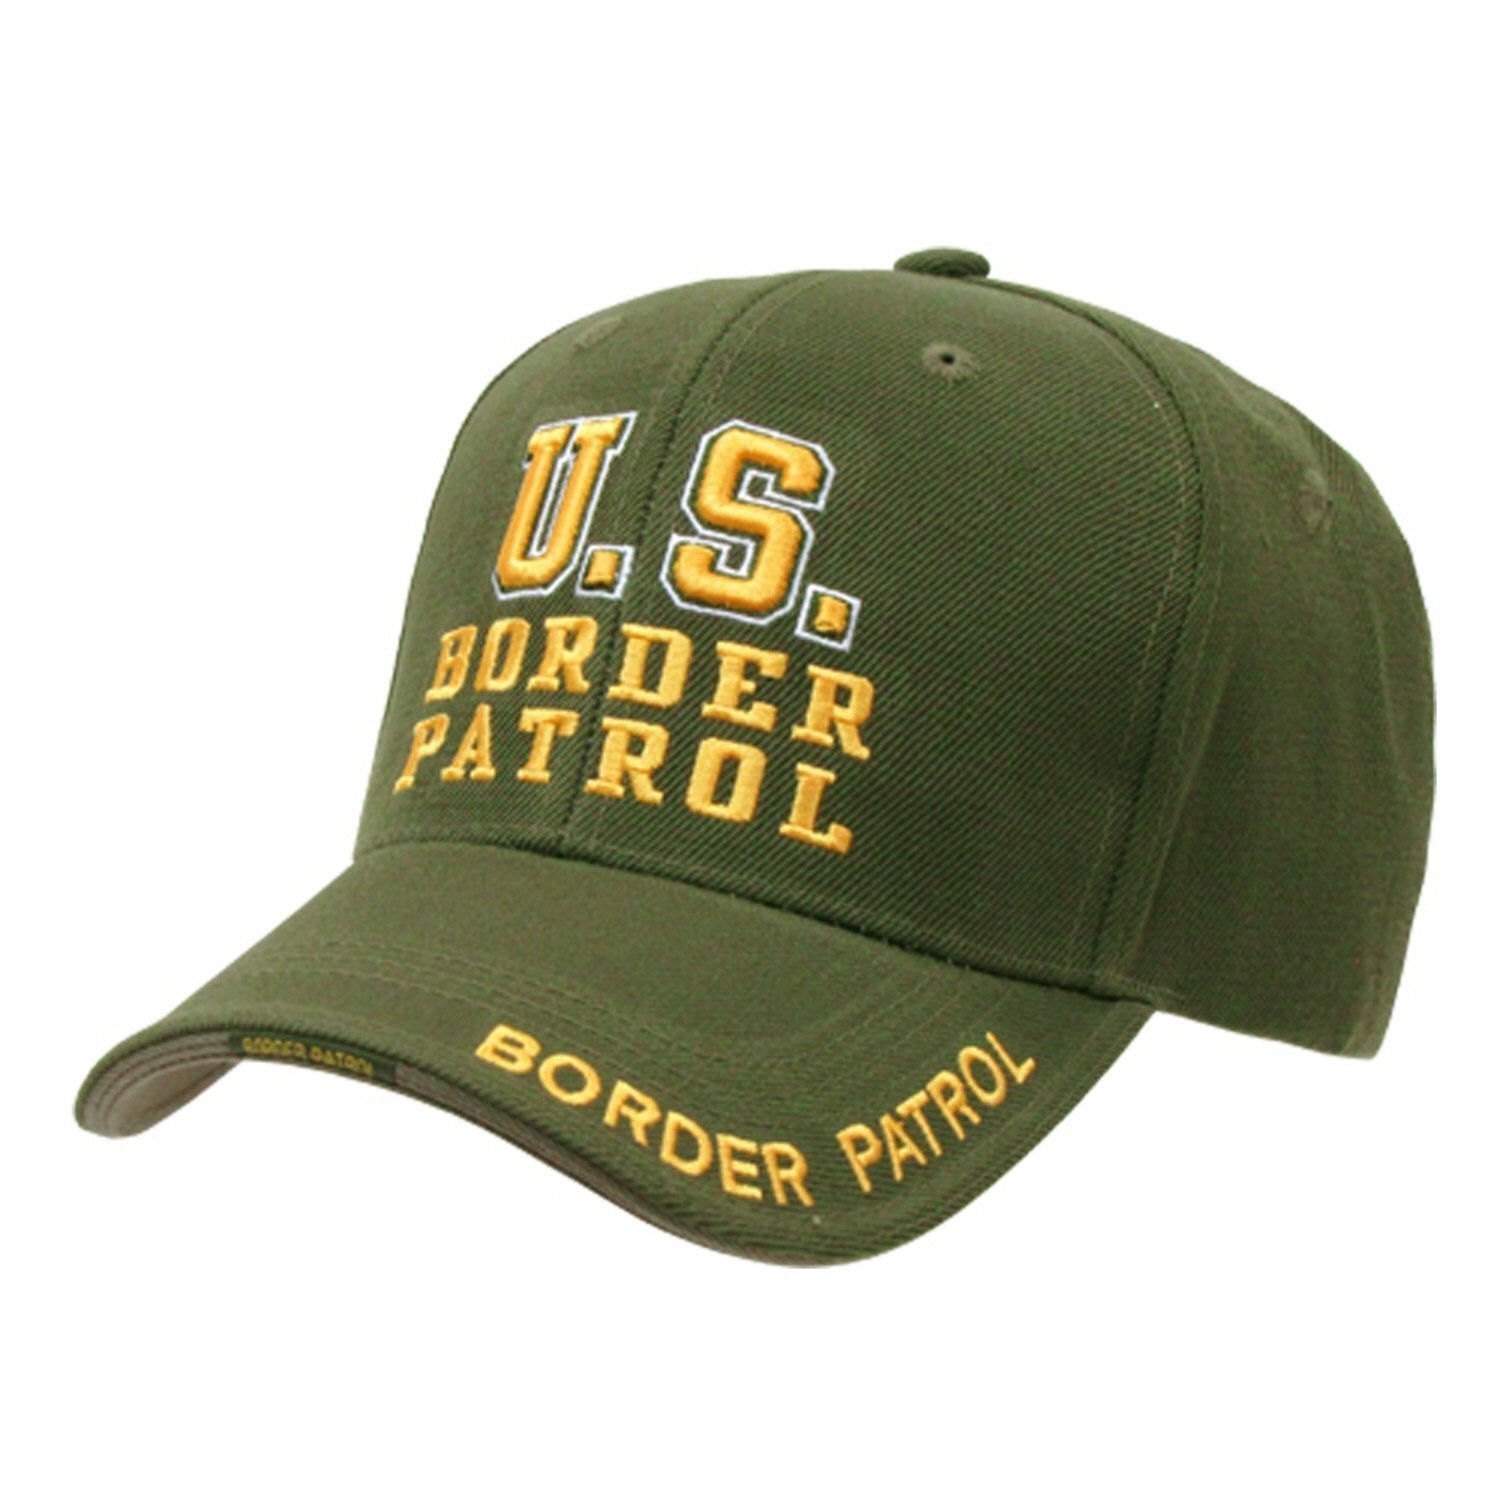 Book Cover US Border Patrol Officer adjustable baseball cap green & yellow